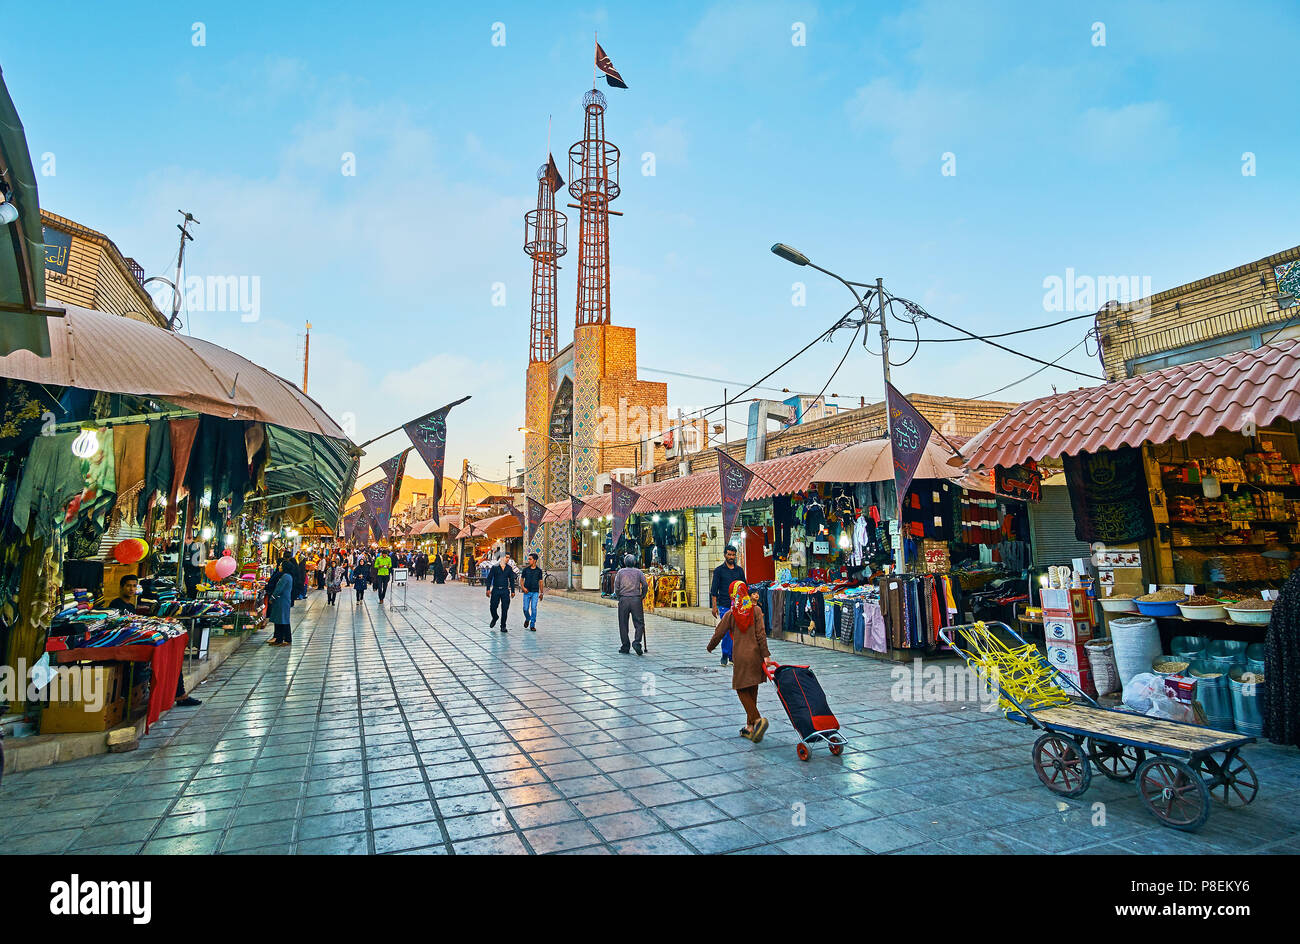 KERMAN, IRAN - 15 octobre 2017 : La rue de Sortasari bazar avec une vue sur la Mosquée Azakhane avec de hauts minarets et scenic portail, vu derrière Banque D'Images